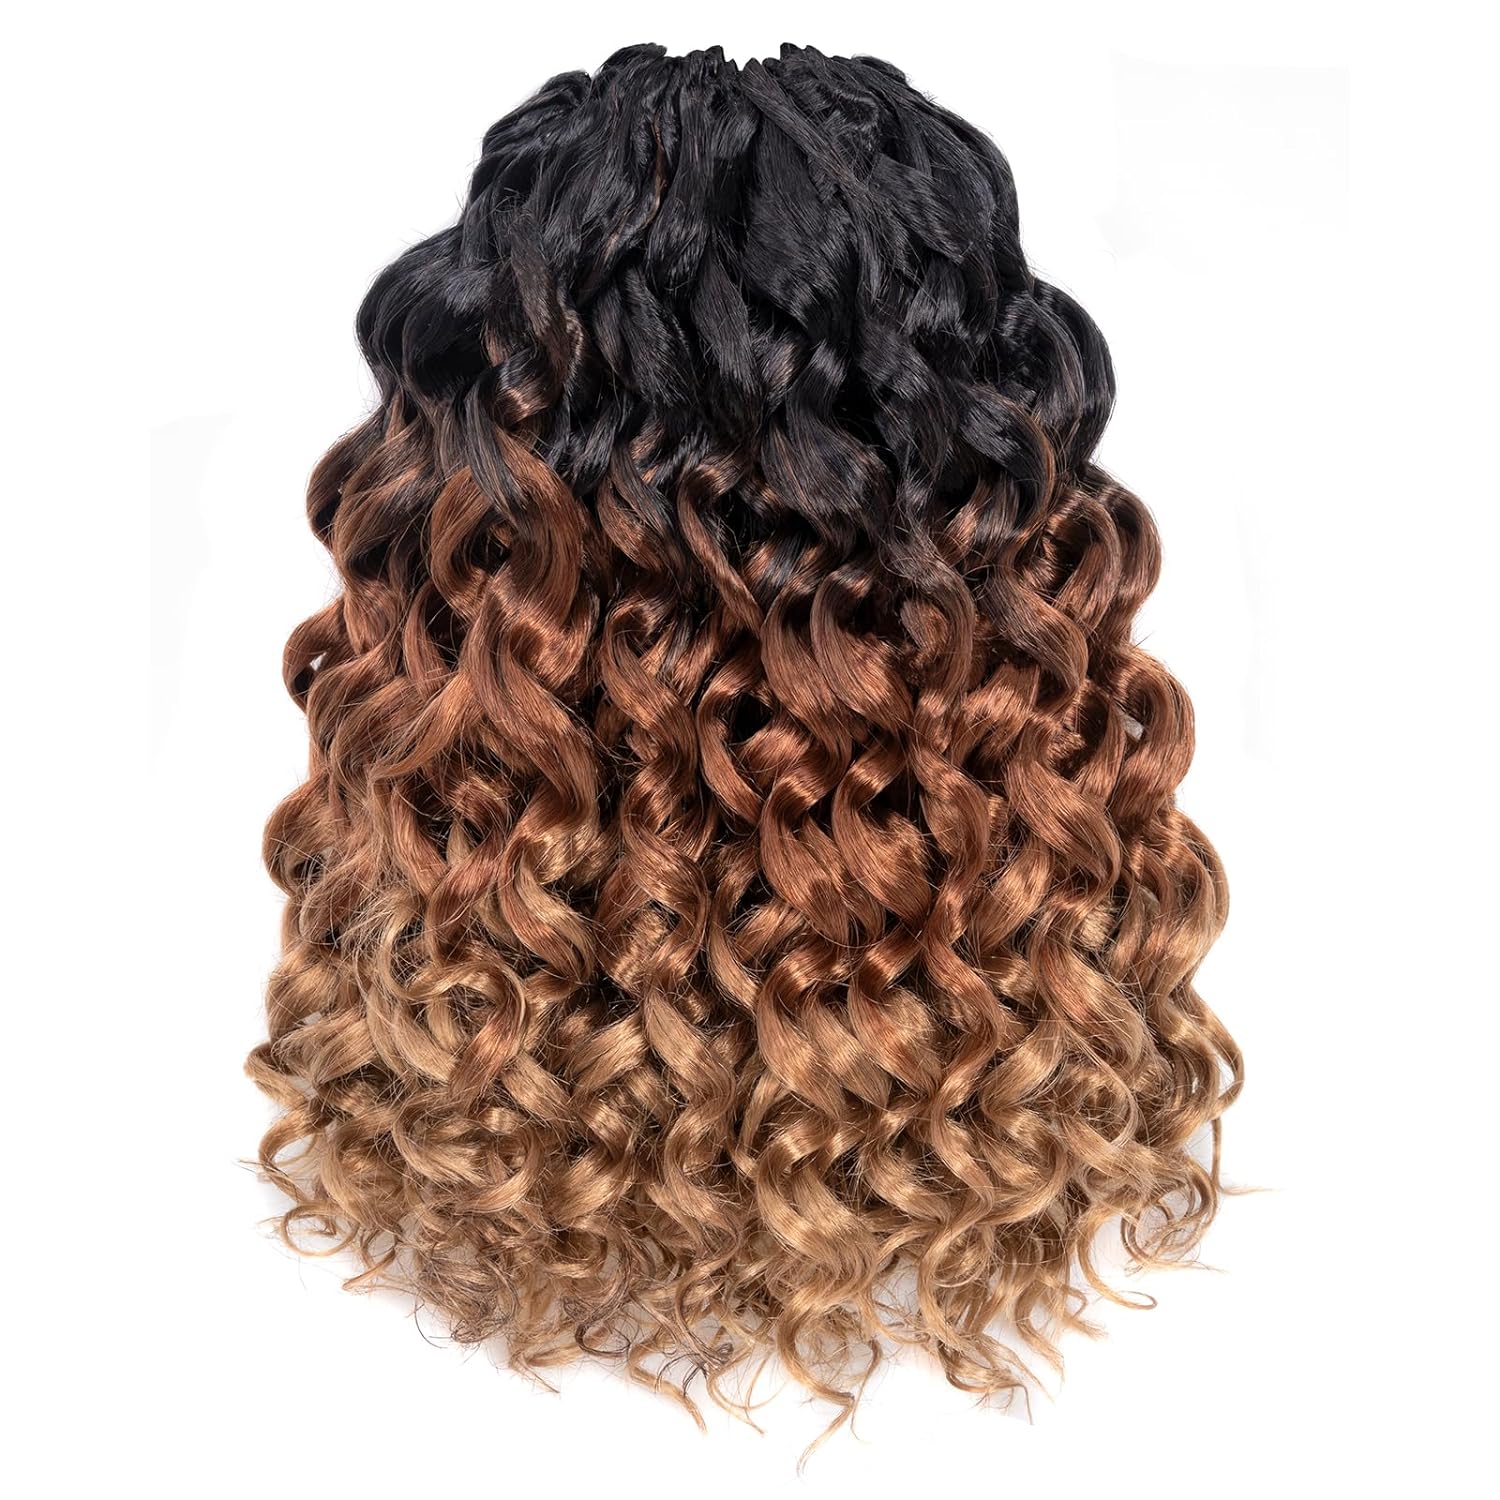 FAST SHIPPING 3-5 DAY BC | Toyotress Beach Curl Crochet Hair - 8 Packs Crochet Hair, Short Curly Beach Wave Wavy Braids For Black Women Synthetic Braiding Hair Extensions